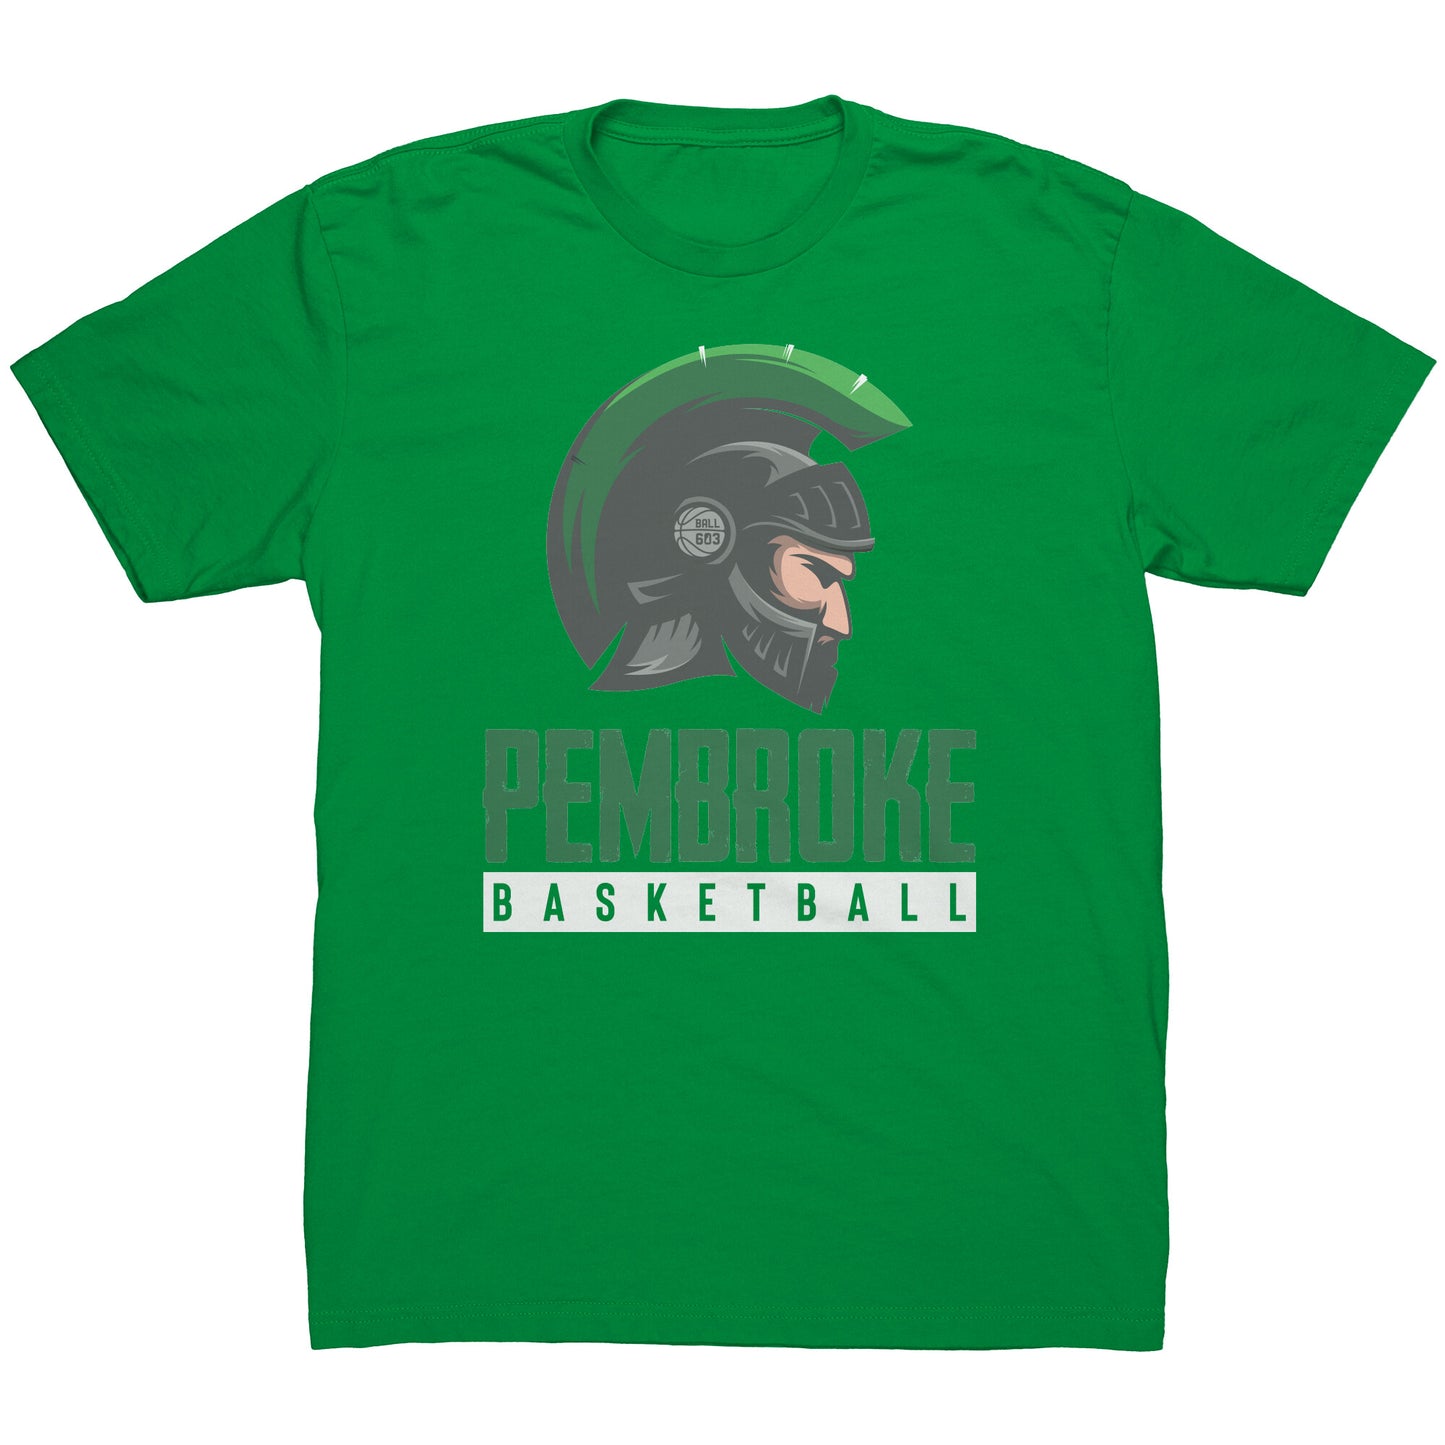 Pembroke Basketball T-Shirt (Men's Cut)